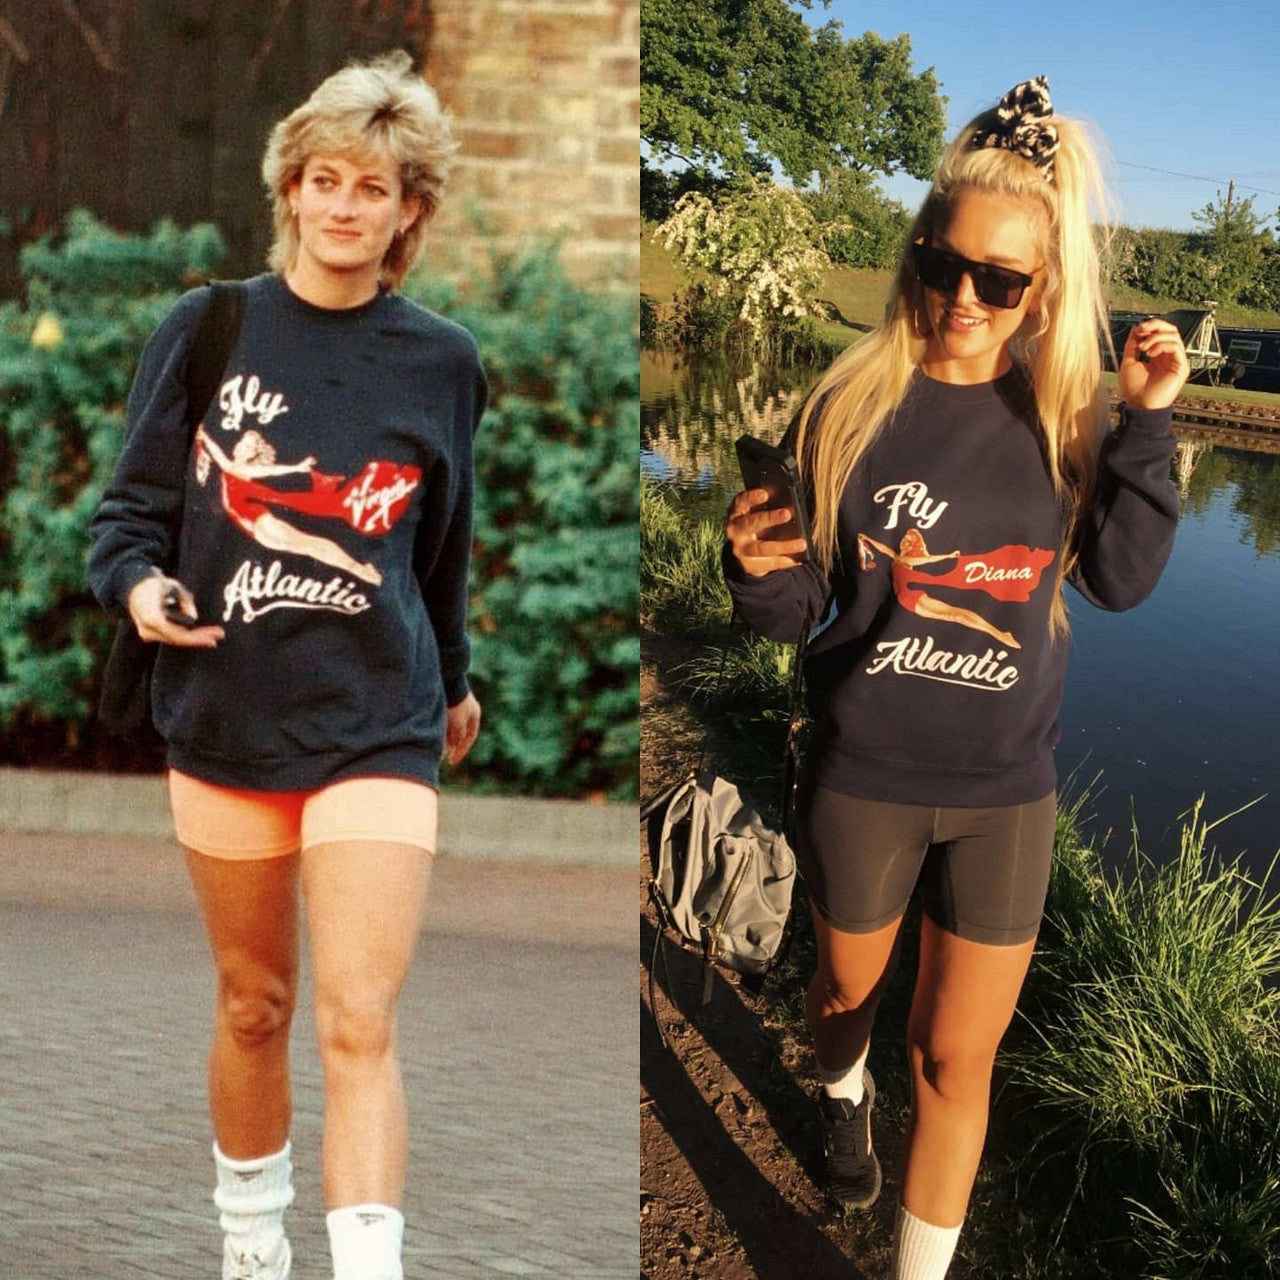 Fly Atlantic KiSS Sweatshirt - Diana - Princess of Wales inspired - Gym Workout Paparazzi - Virgin Airline Pin Up girl